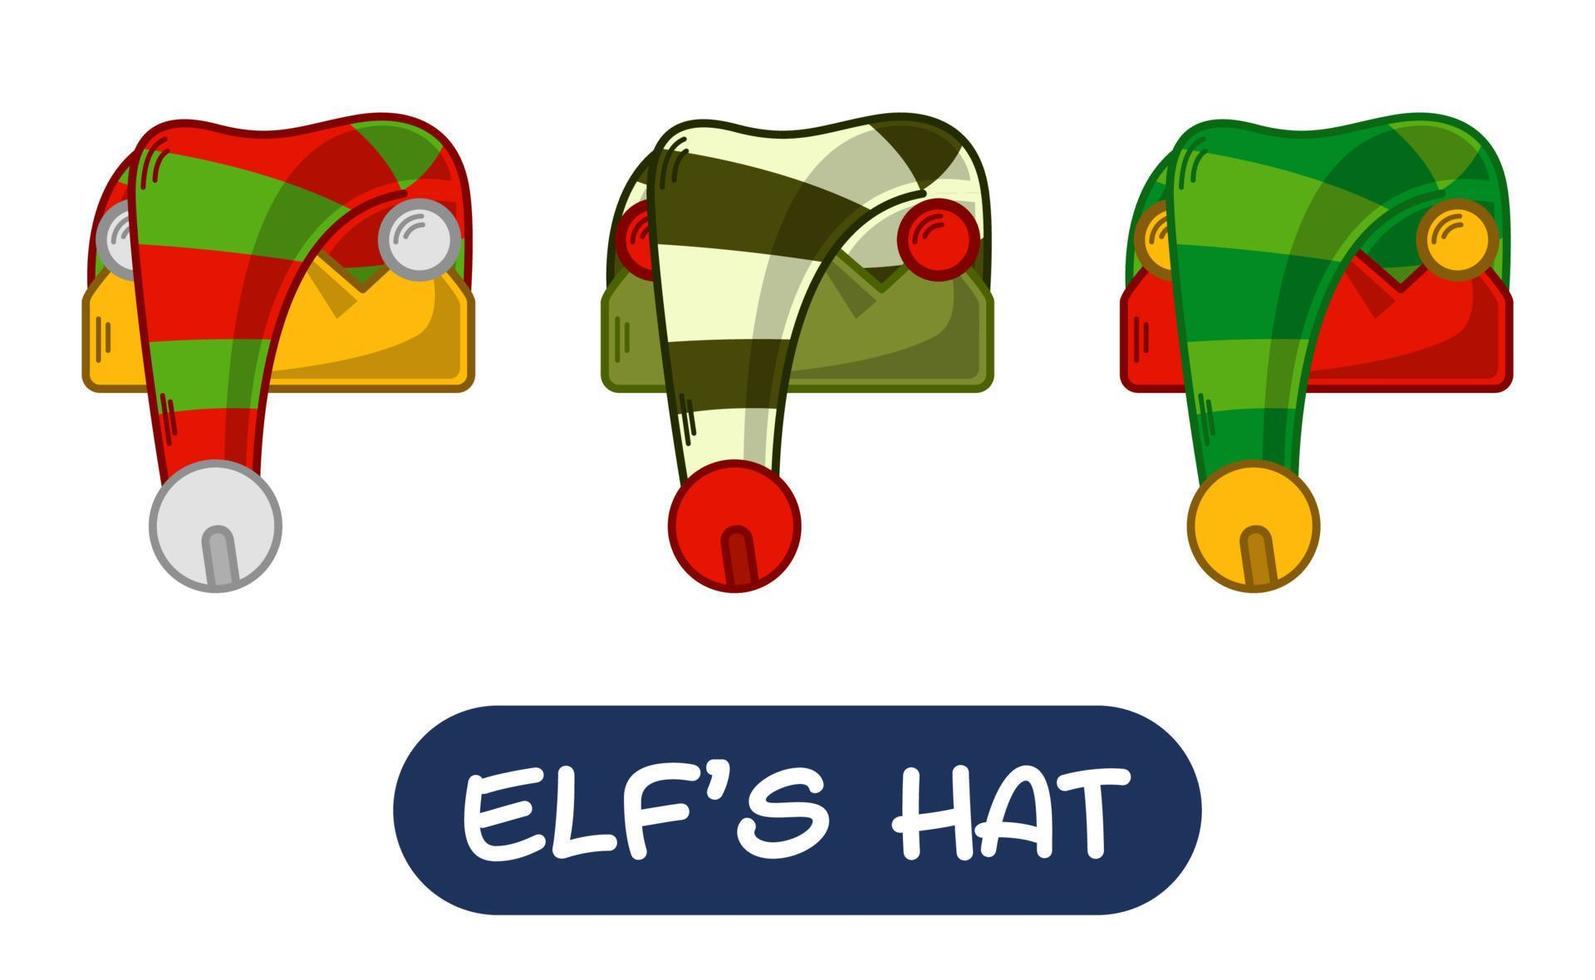 Cartoon Elf Hat Illustration. Set of Variation Colors. EPS 10 Vector